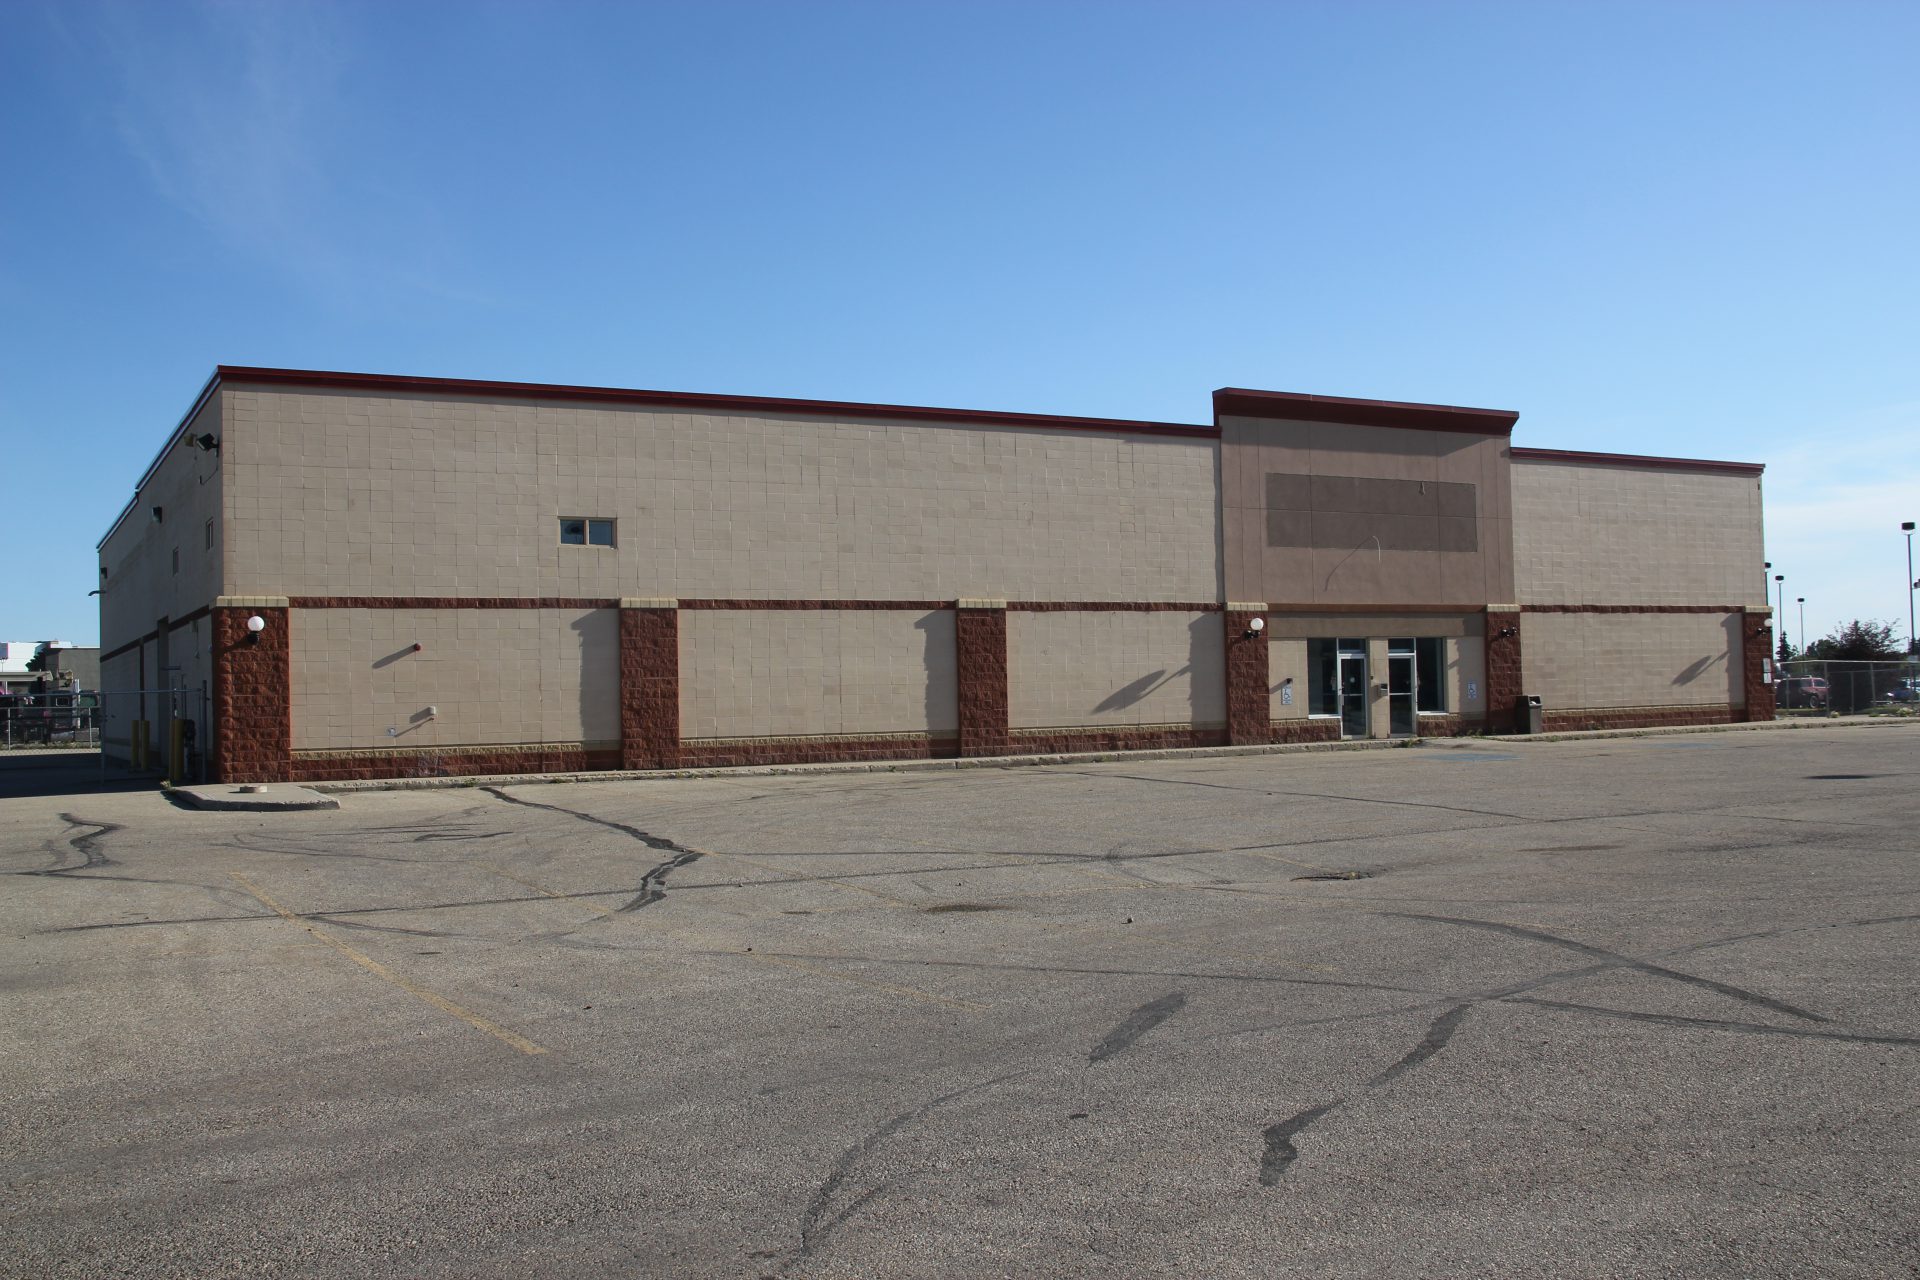 Bottle depot facility proposed for former Peavey Mart